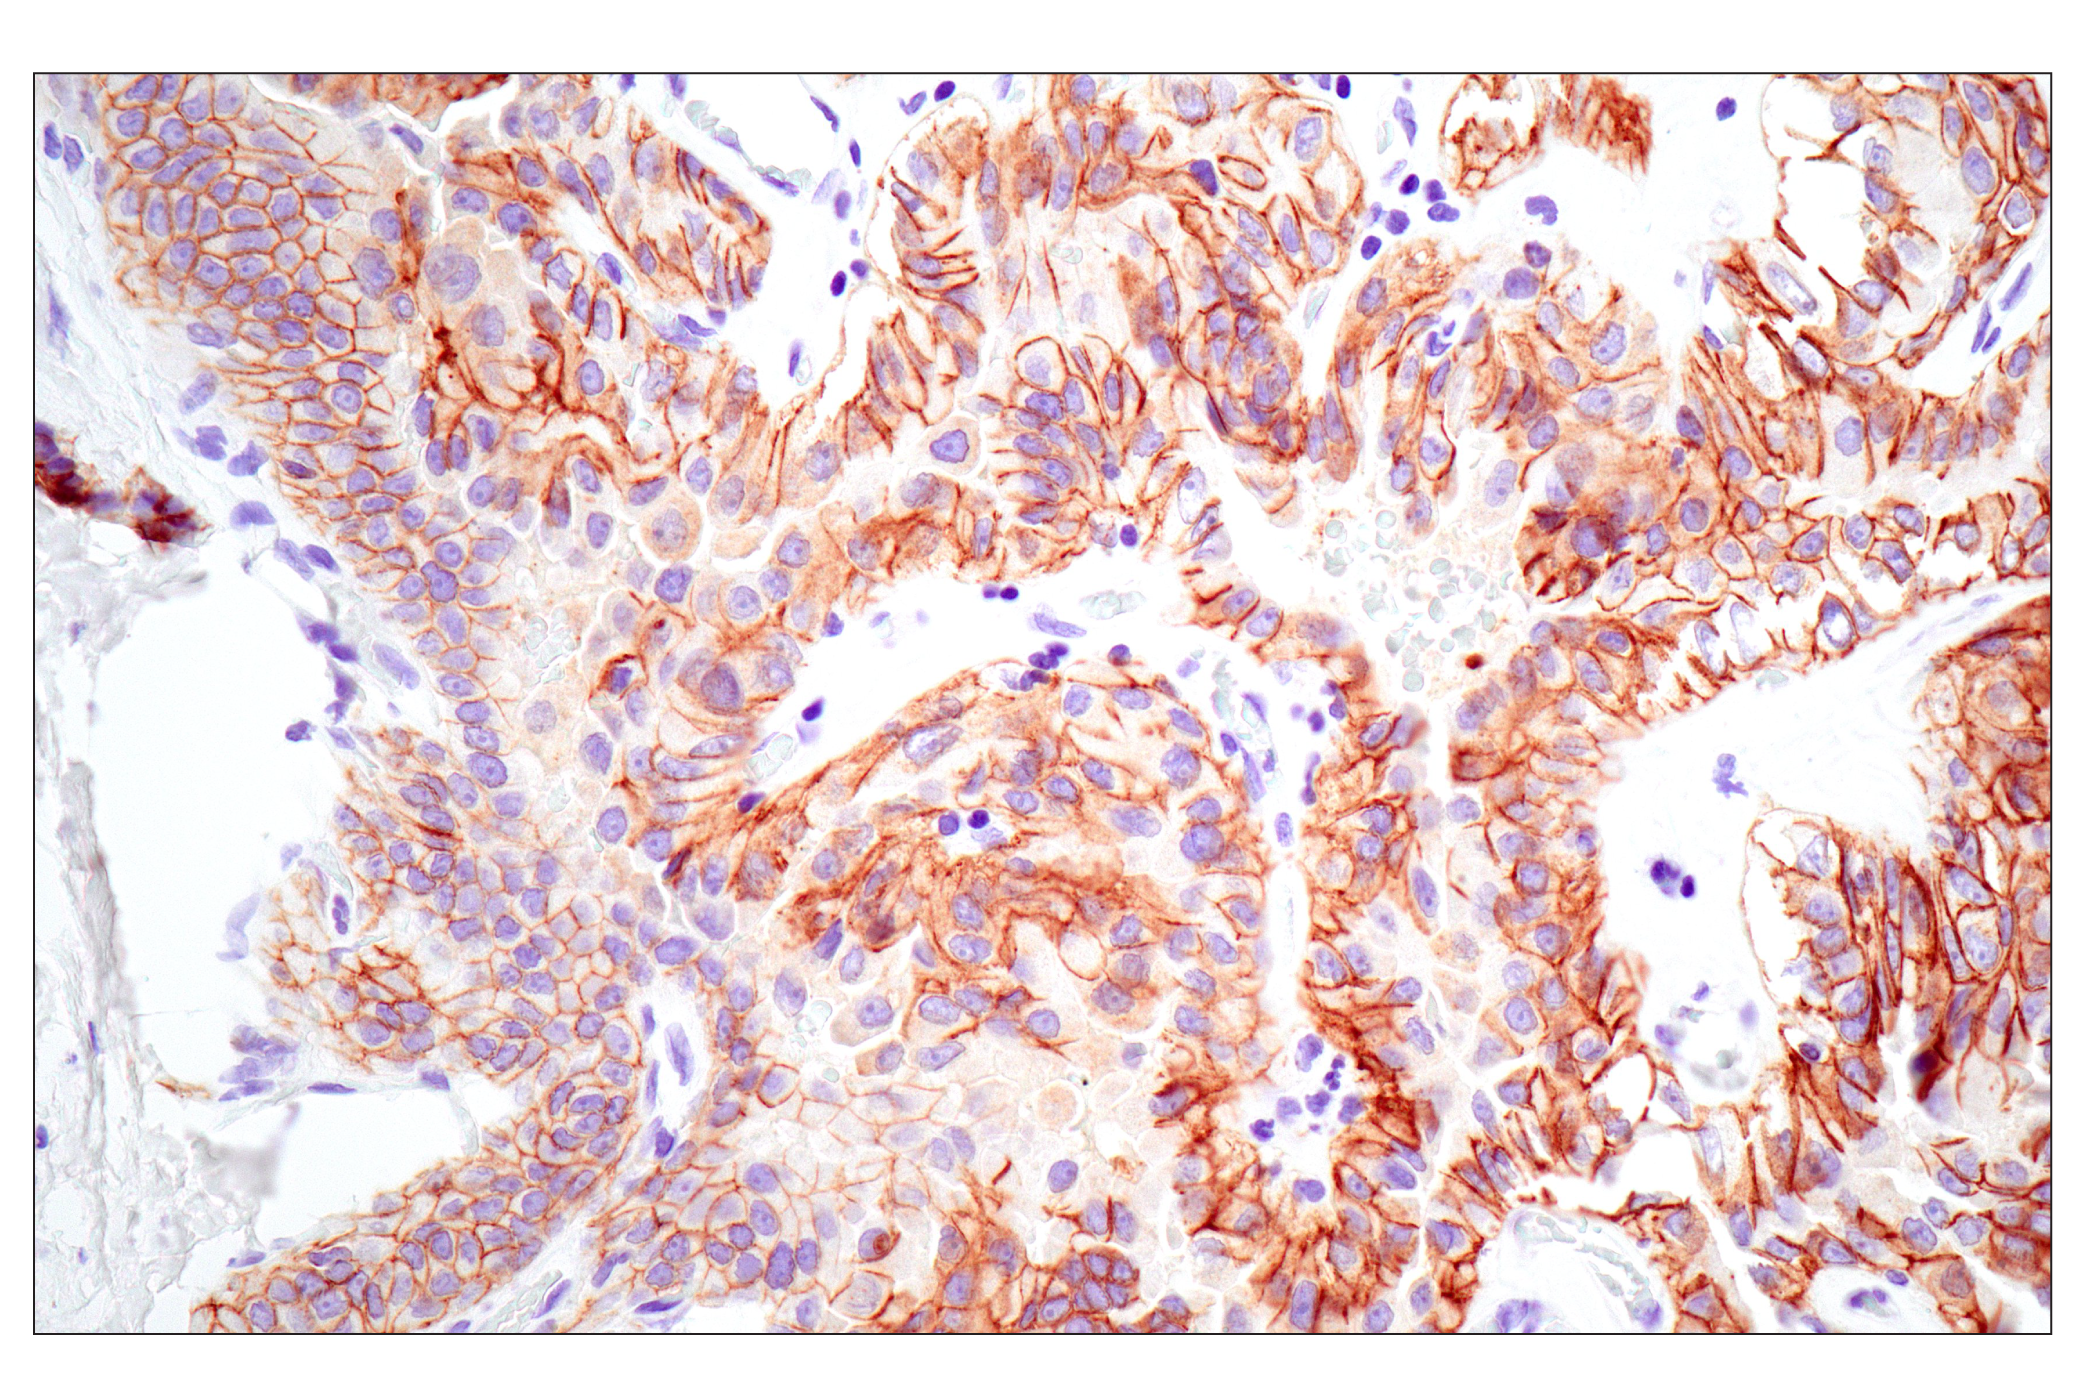  Image 19: Epithelial-Mesenchymal Transition (EMT) IF Antibody Sampler Kit